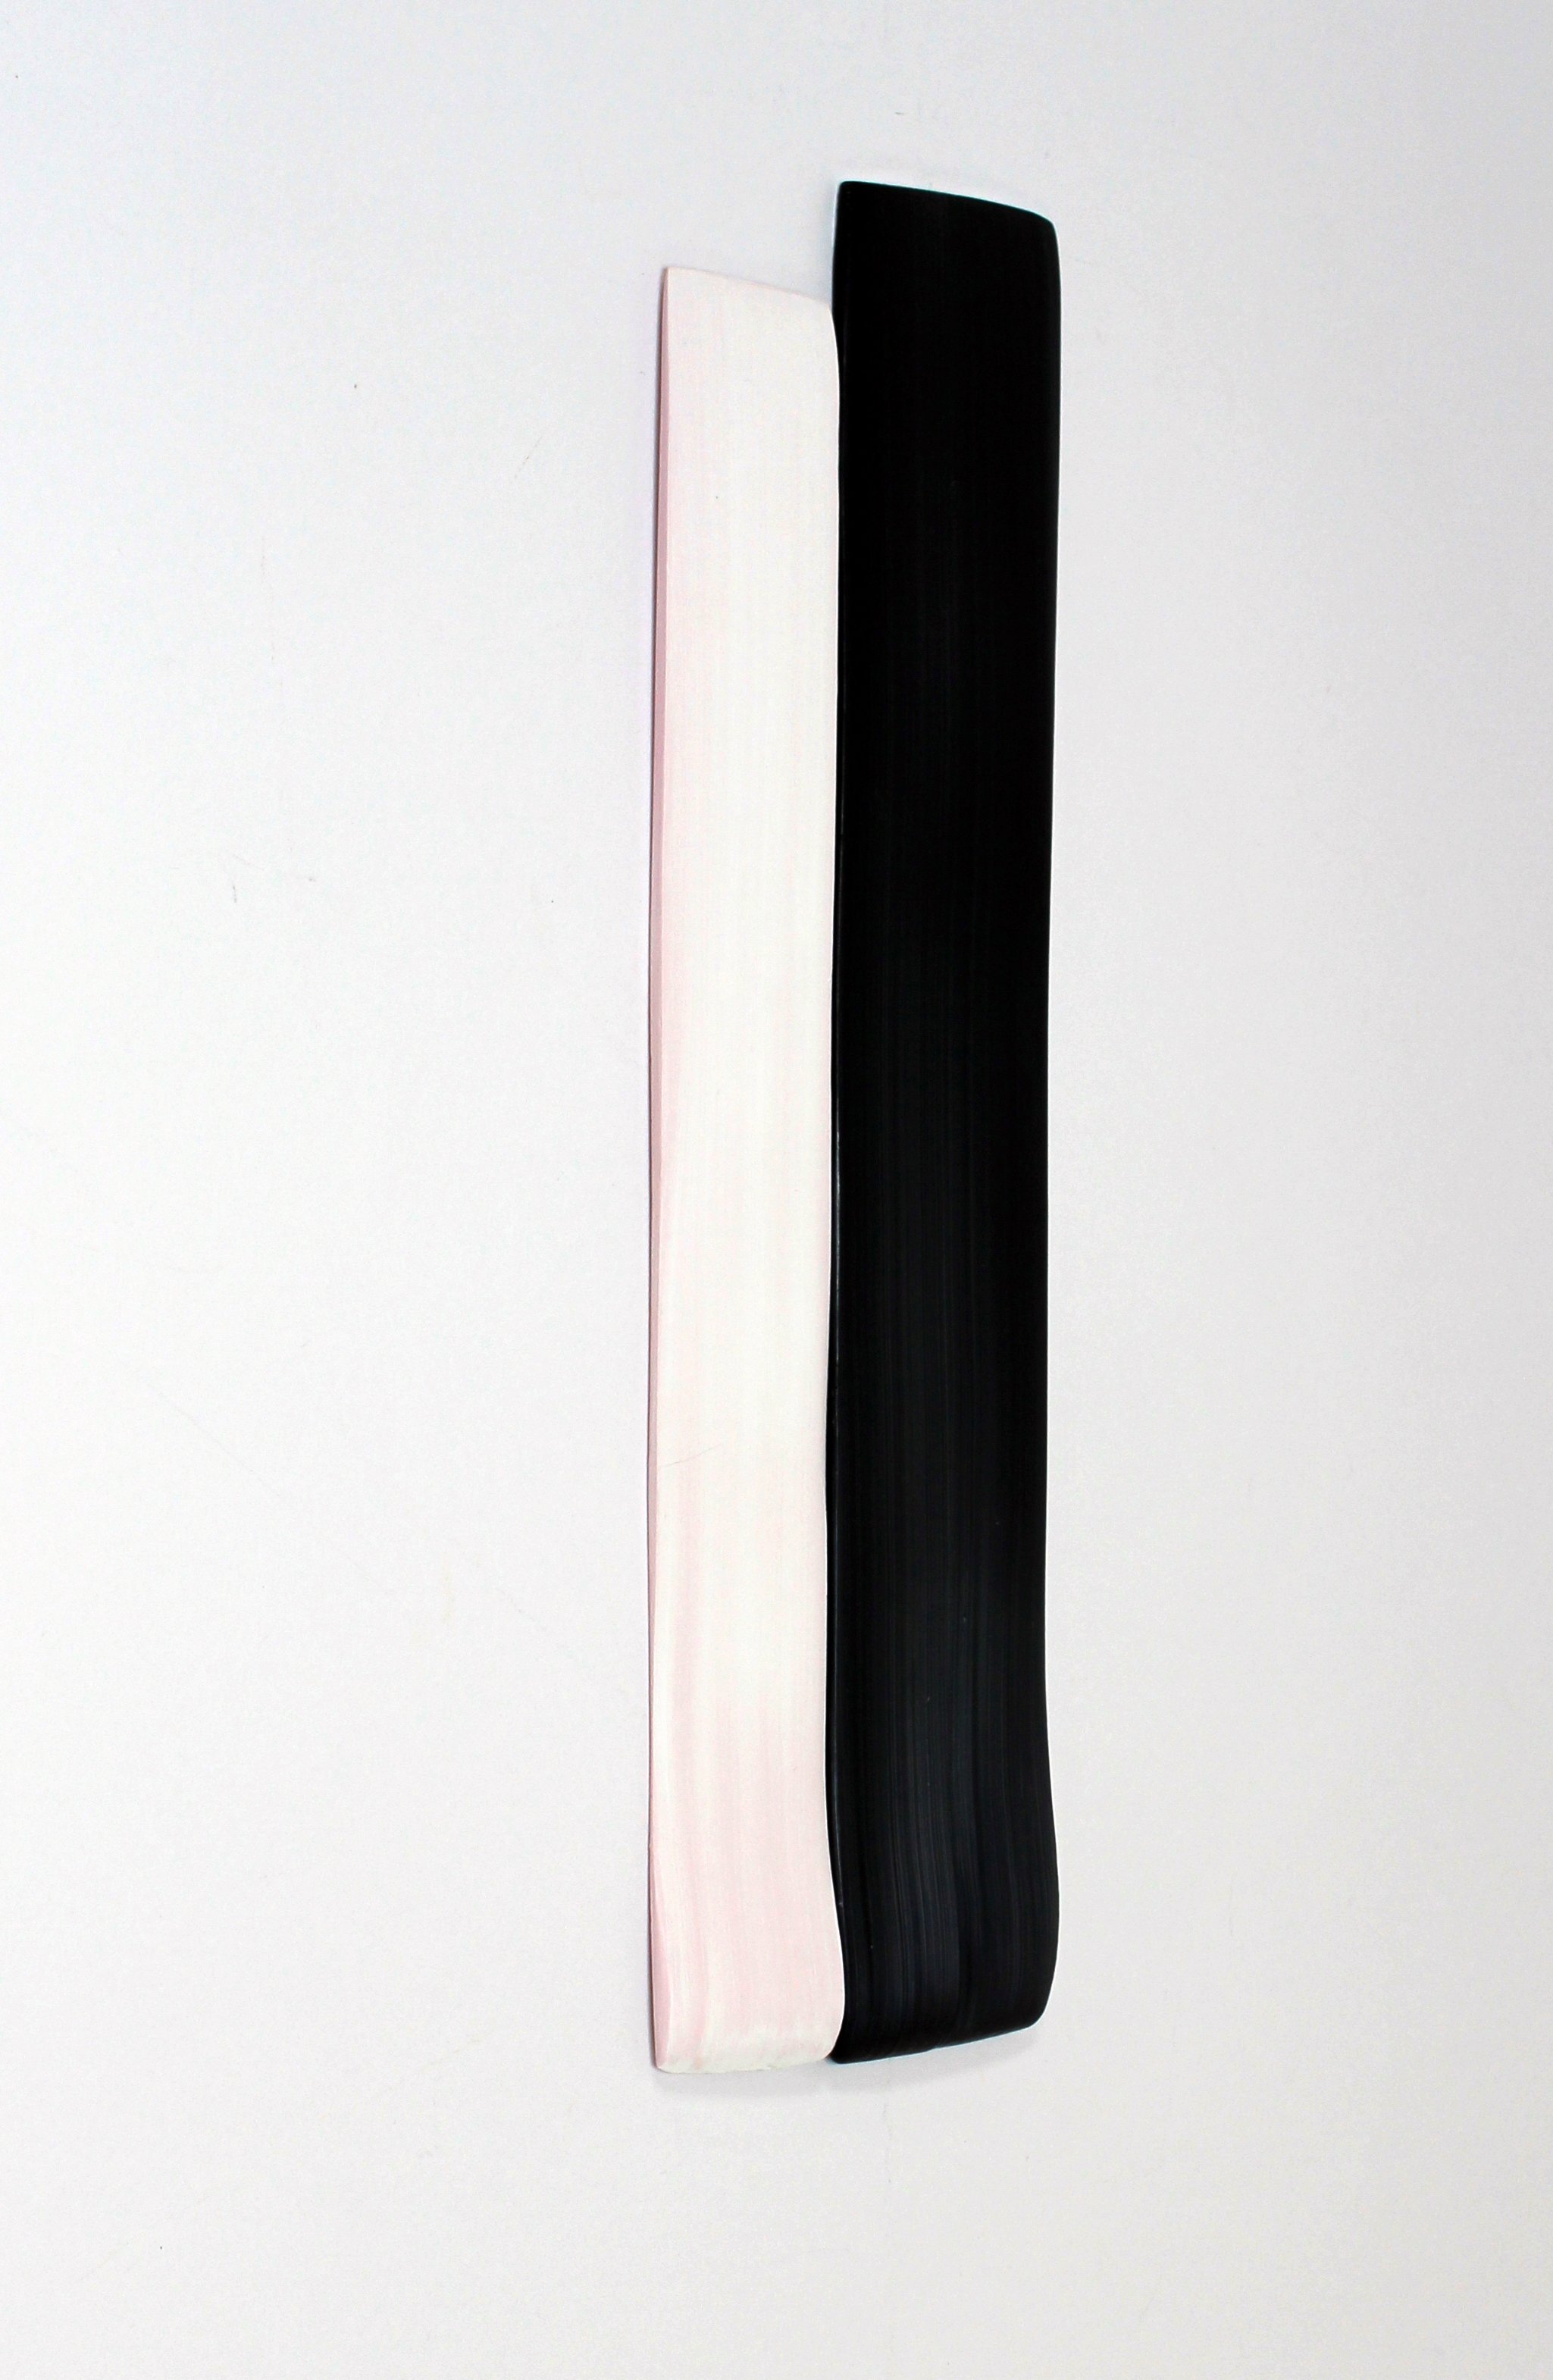 13.M. B. O’Toole, Gesture Series II, Oil on plaster, dimensions variable, 2014-2022.JPG